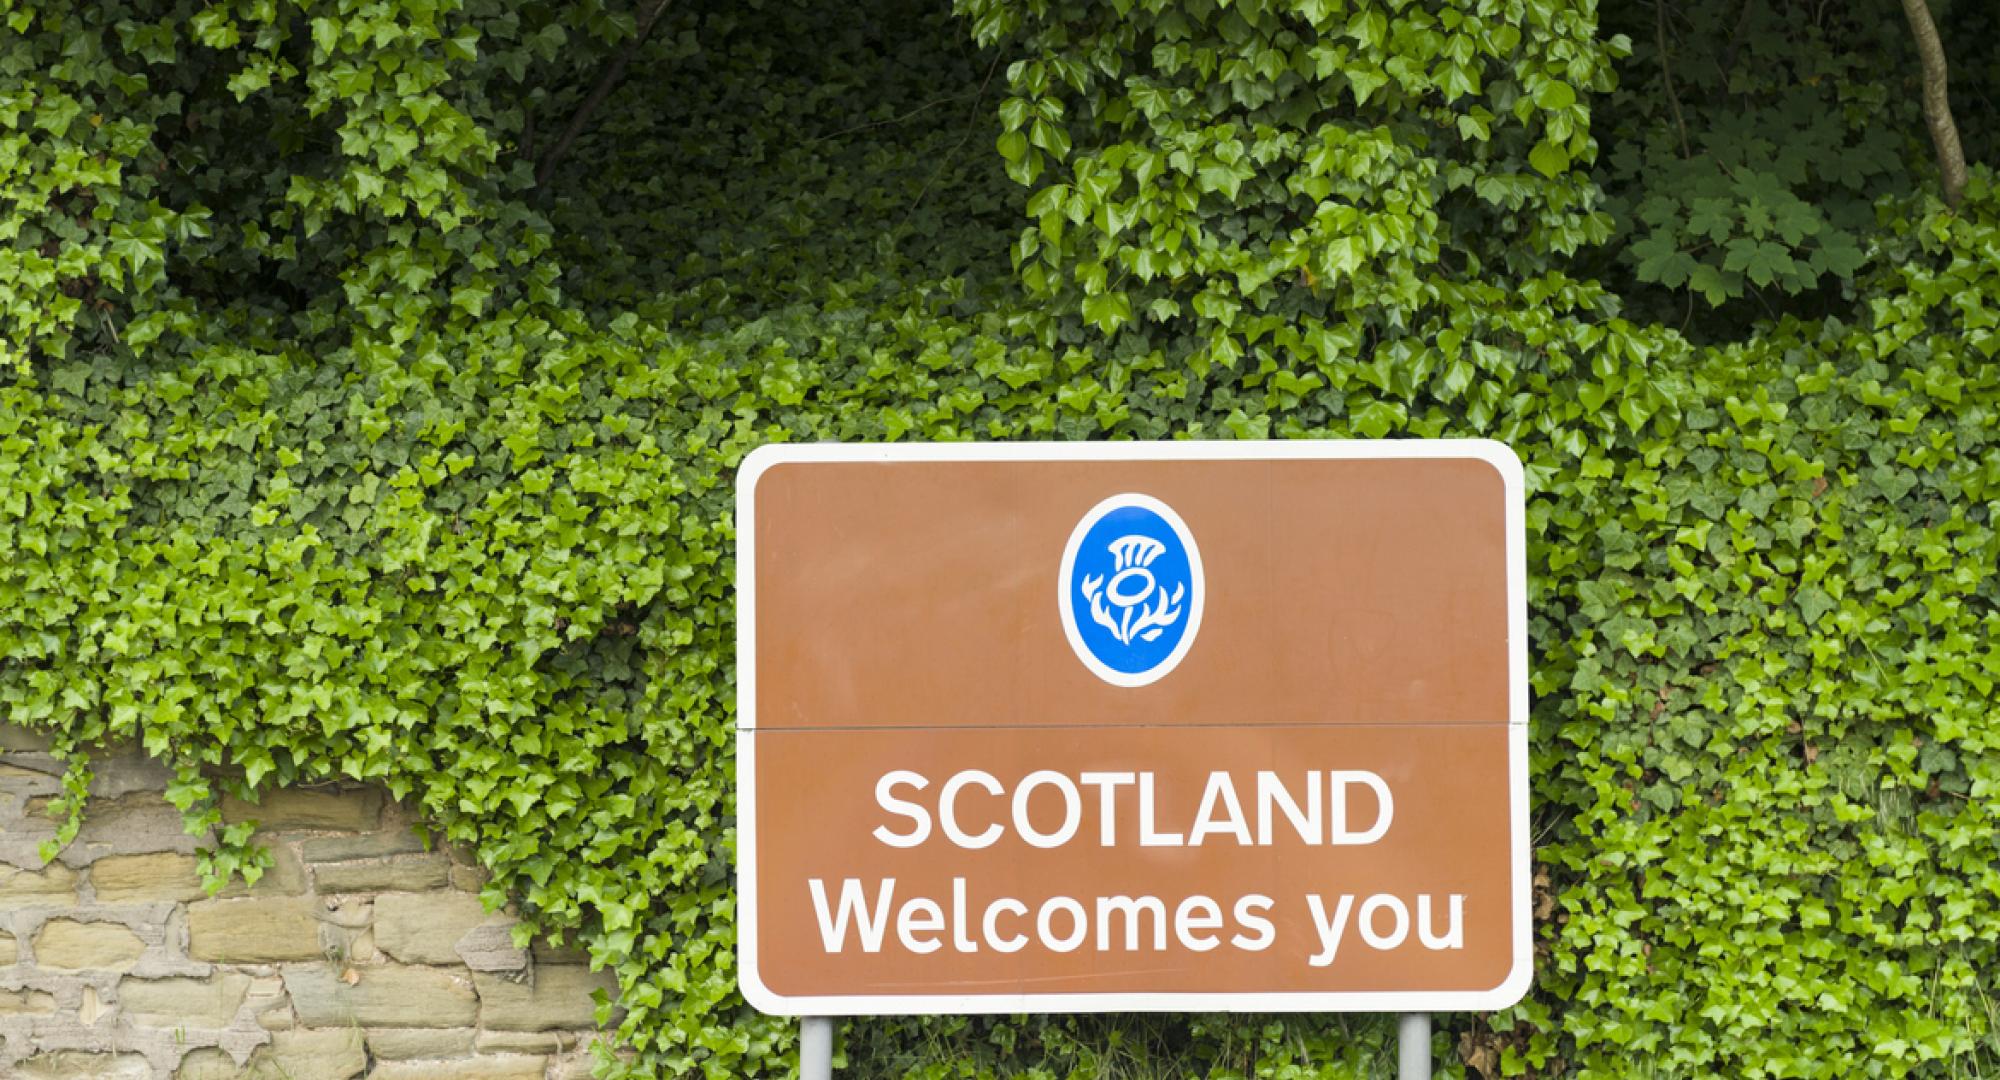 Road saying 'Scotland welcomes you'